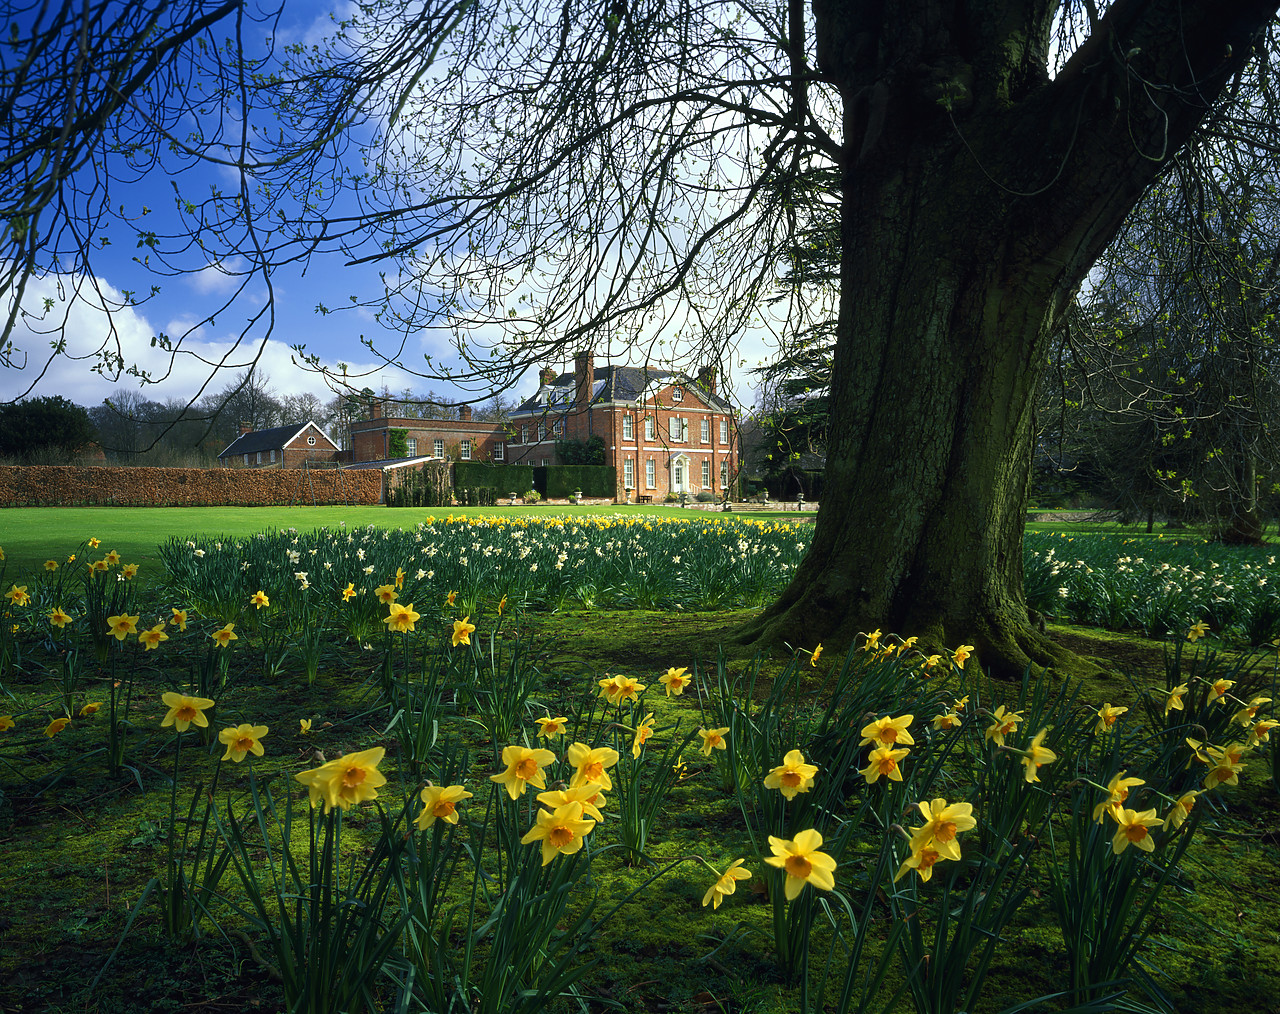 #200219-2 - Bradenham Hall in Spring, Bradenham, Norfolk, England